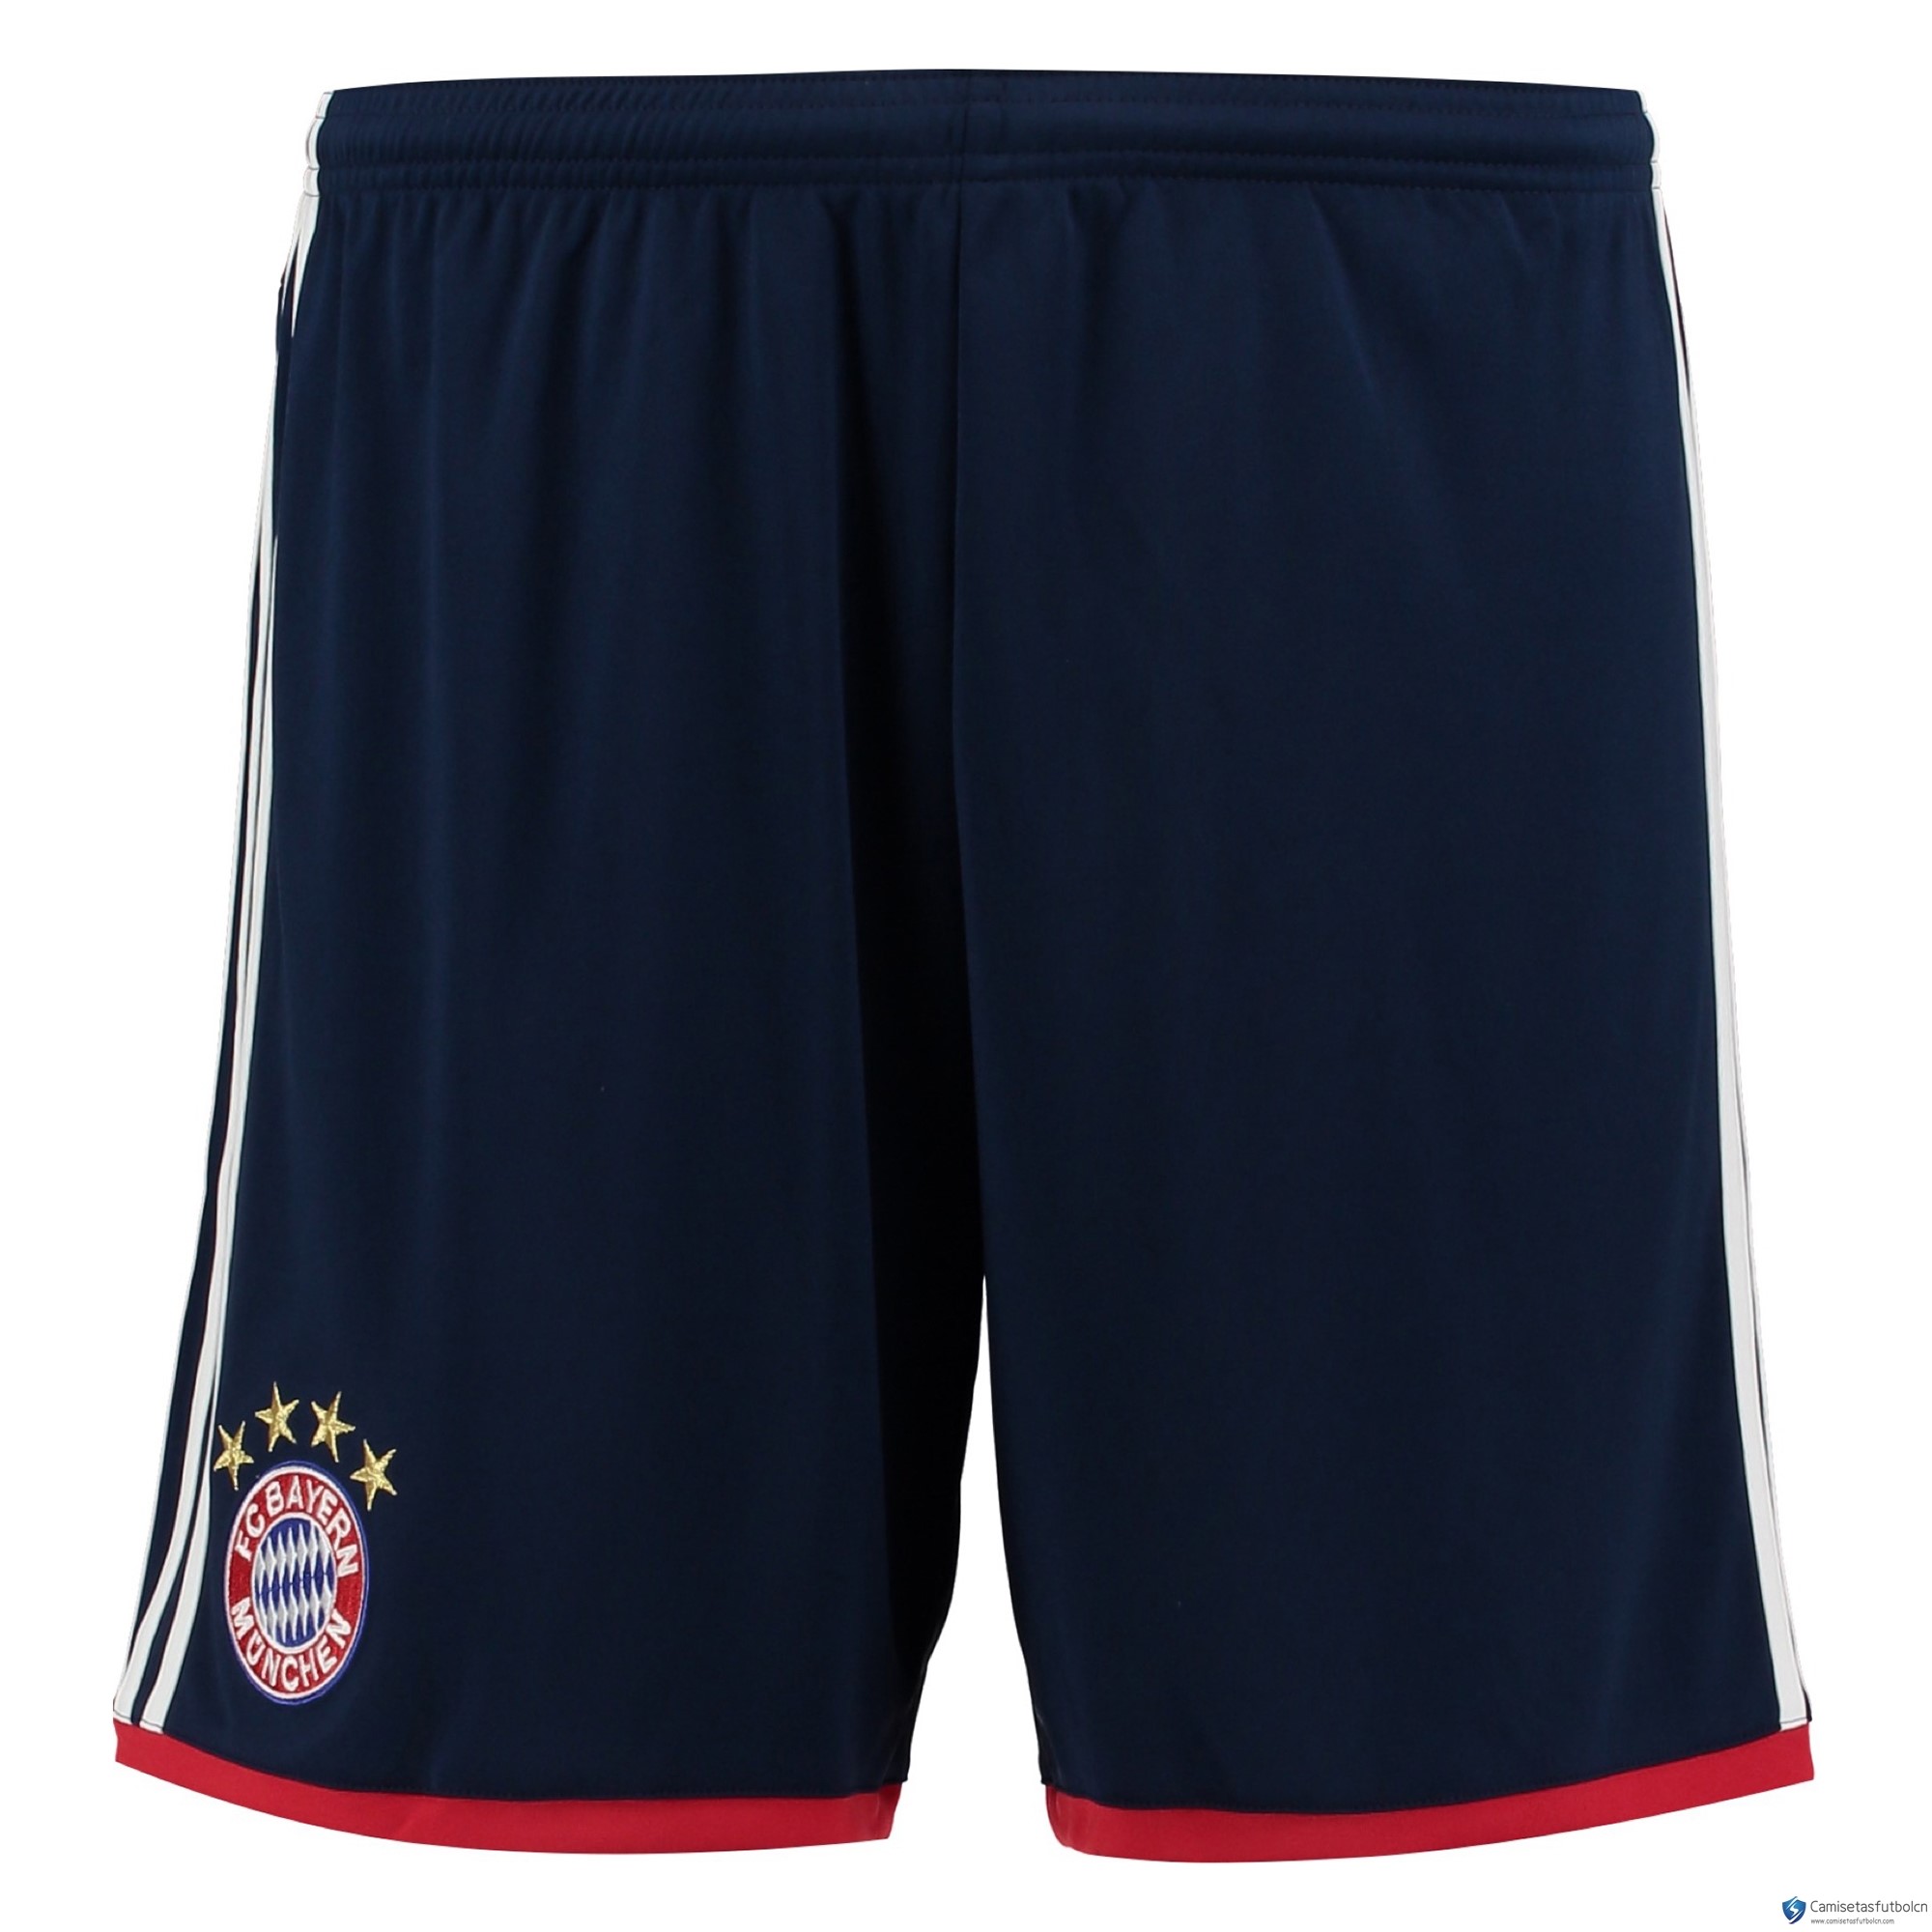 Pantalones Bayern Munich Segunda equipo 2017-18